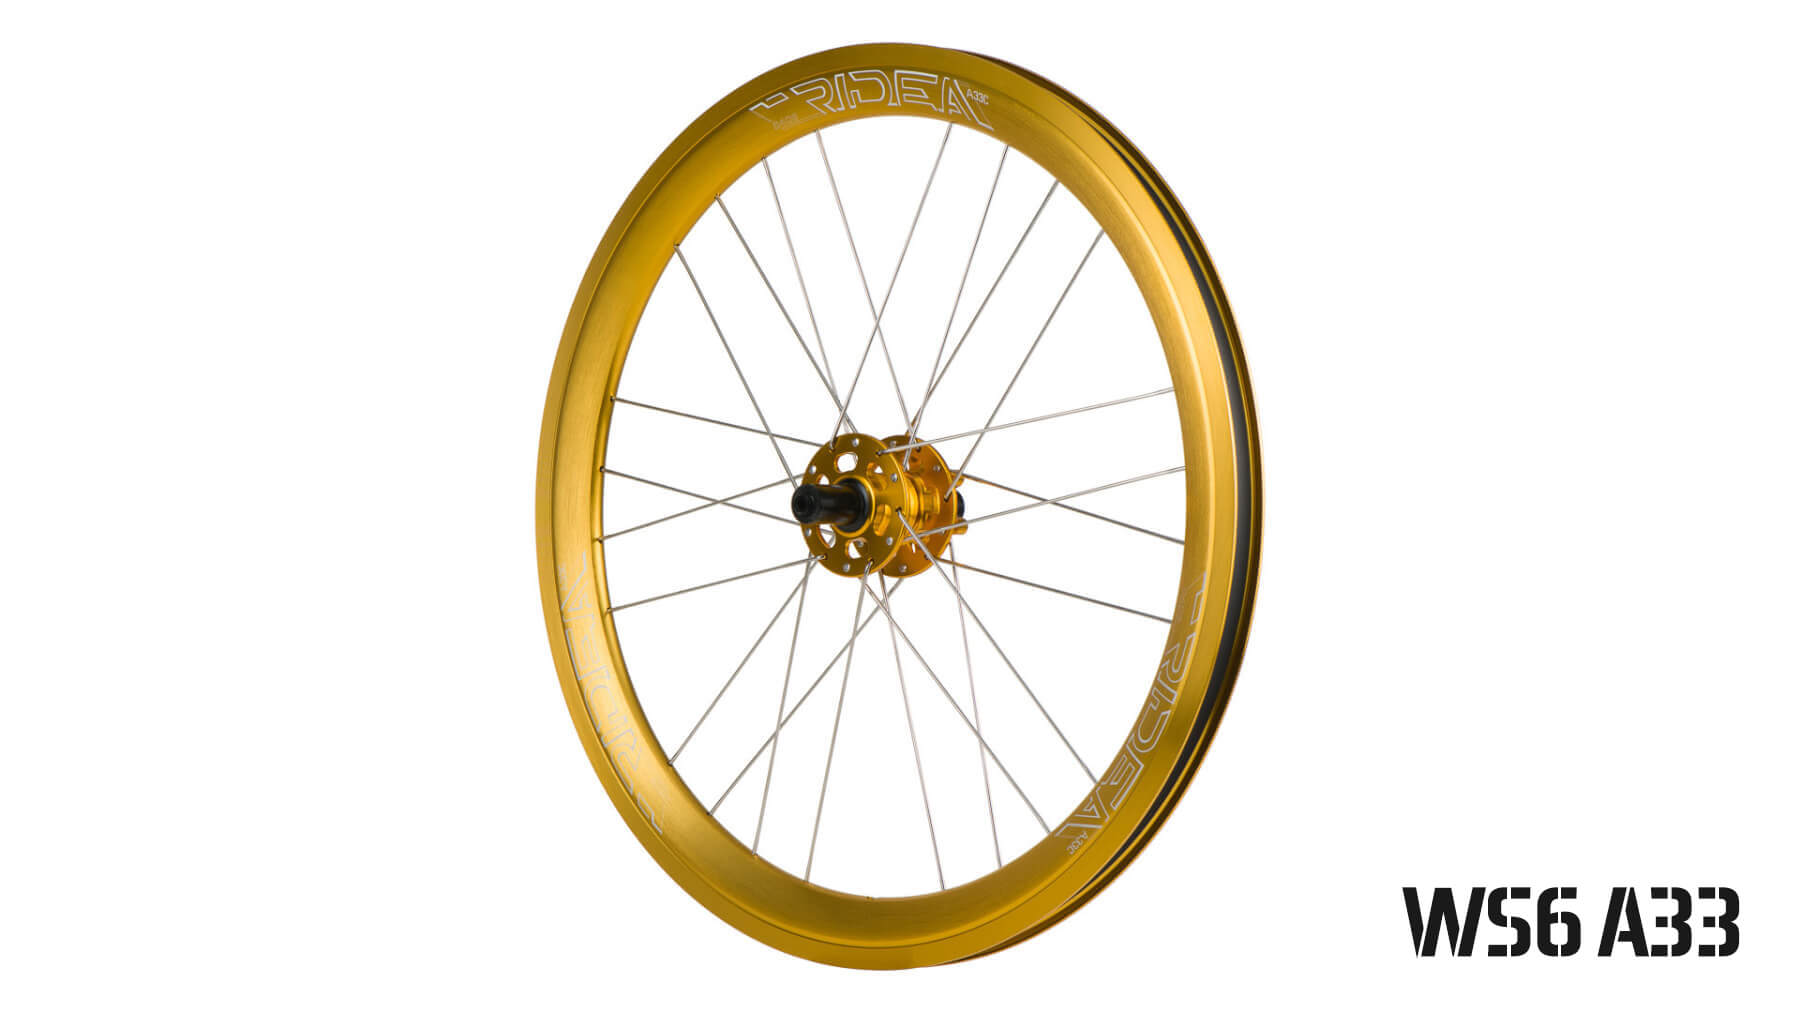 406 mm alloy wheels (Dahon)